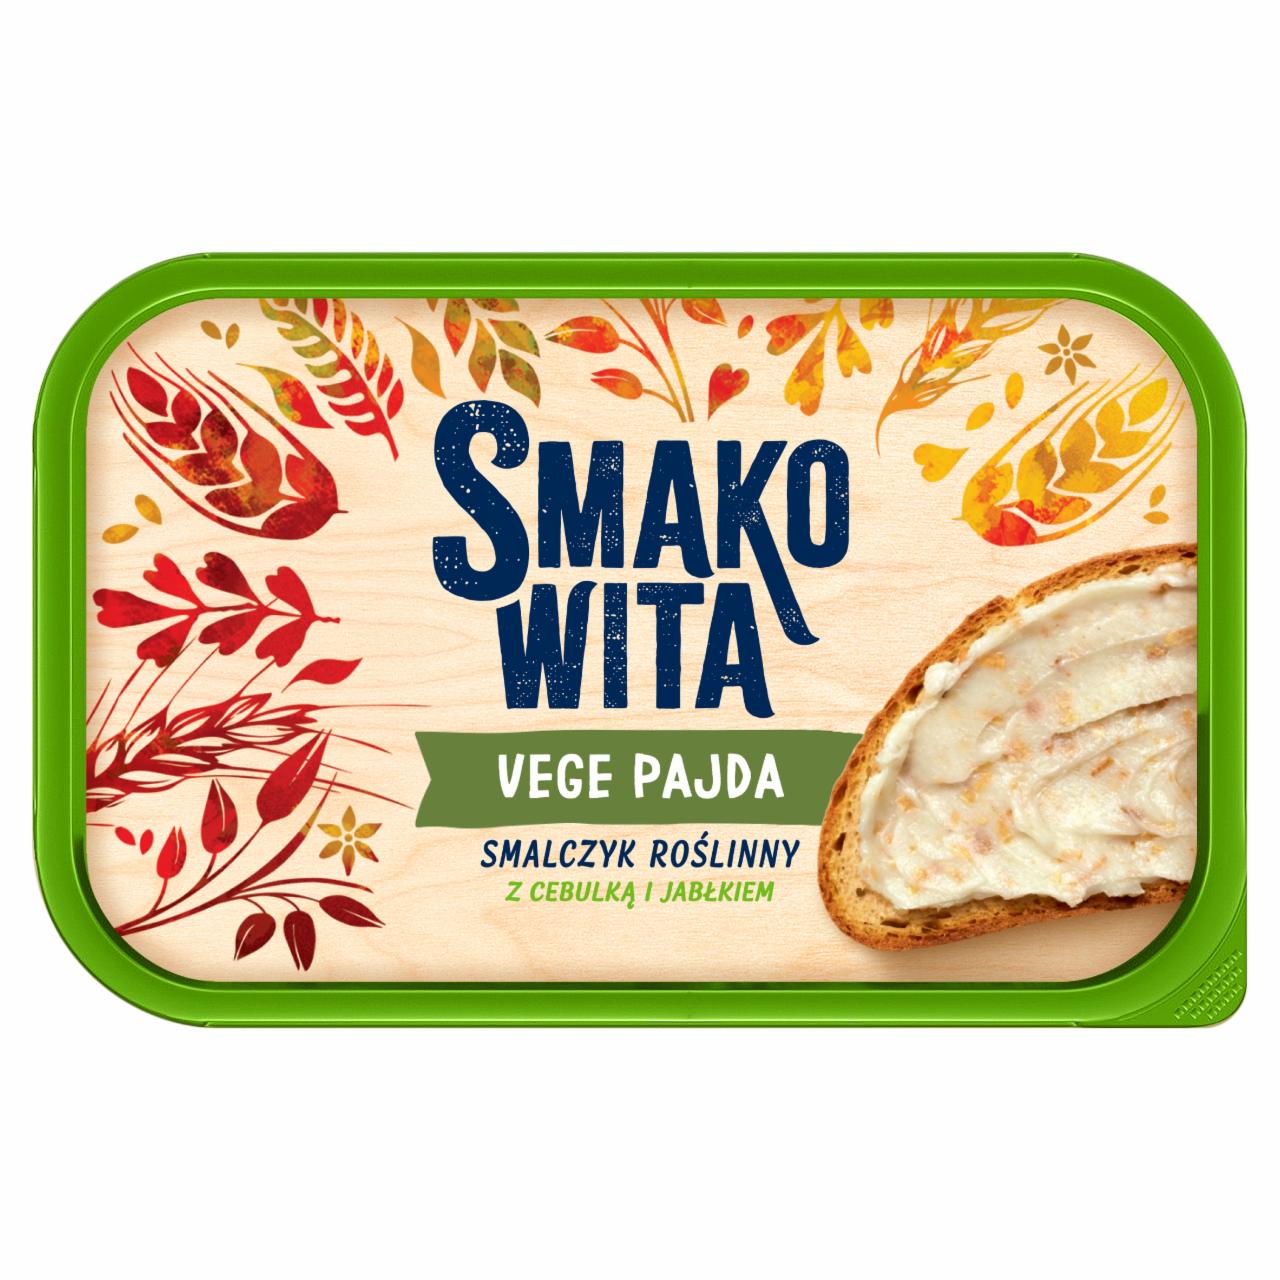 Photo - Smakowita Vege Pajda Vegetable Lard with Onion and Apple 180 g